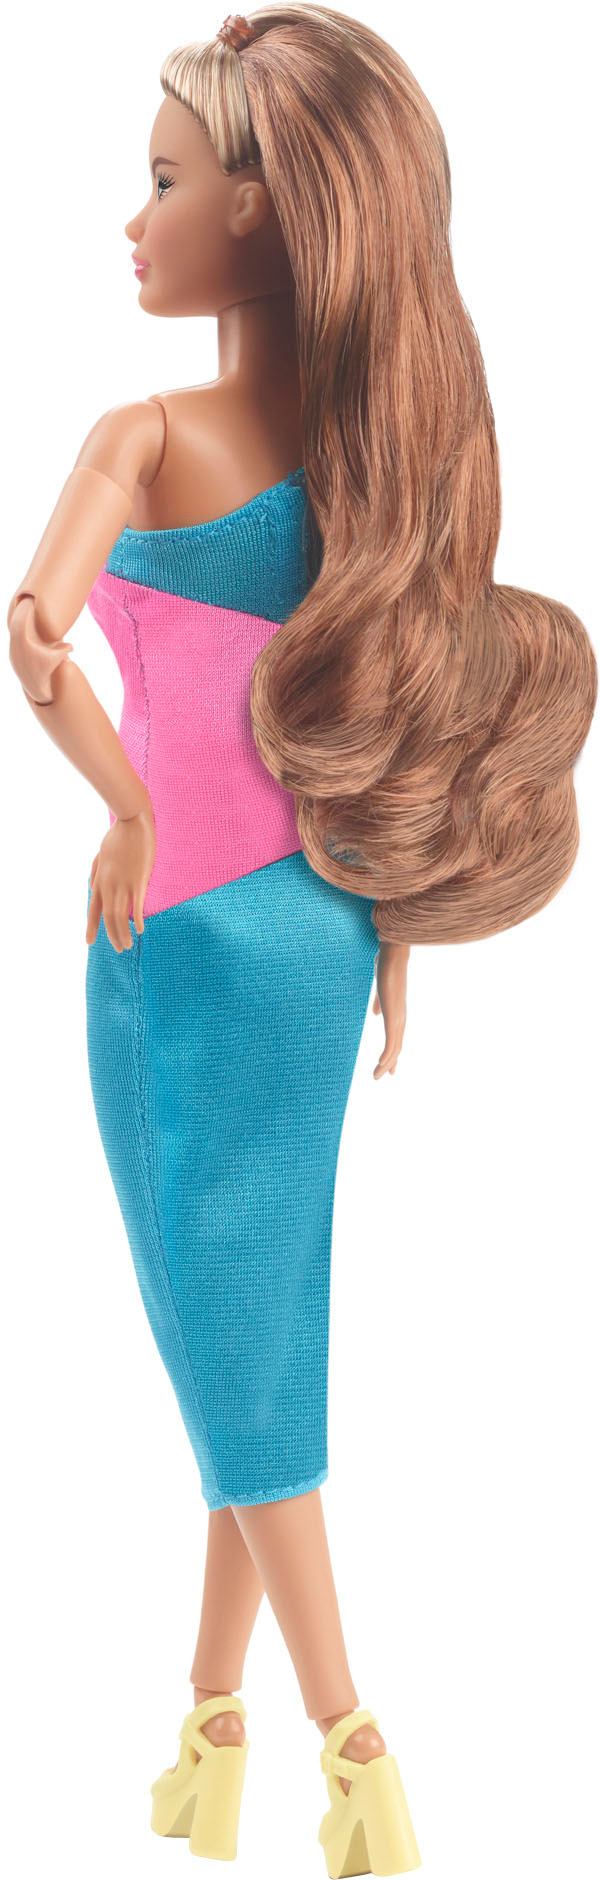 Best Buy: Barbie Looks Signature Natural Black Hair 13 Doll HJW81